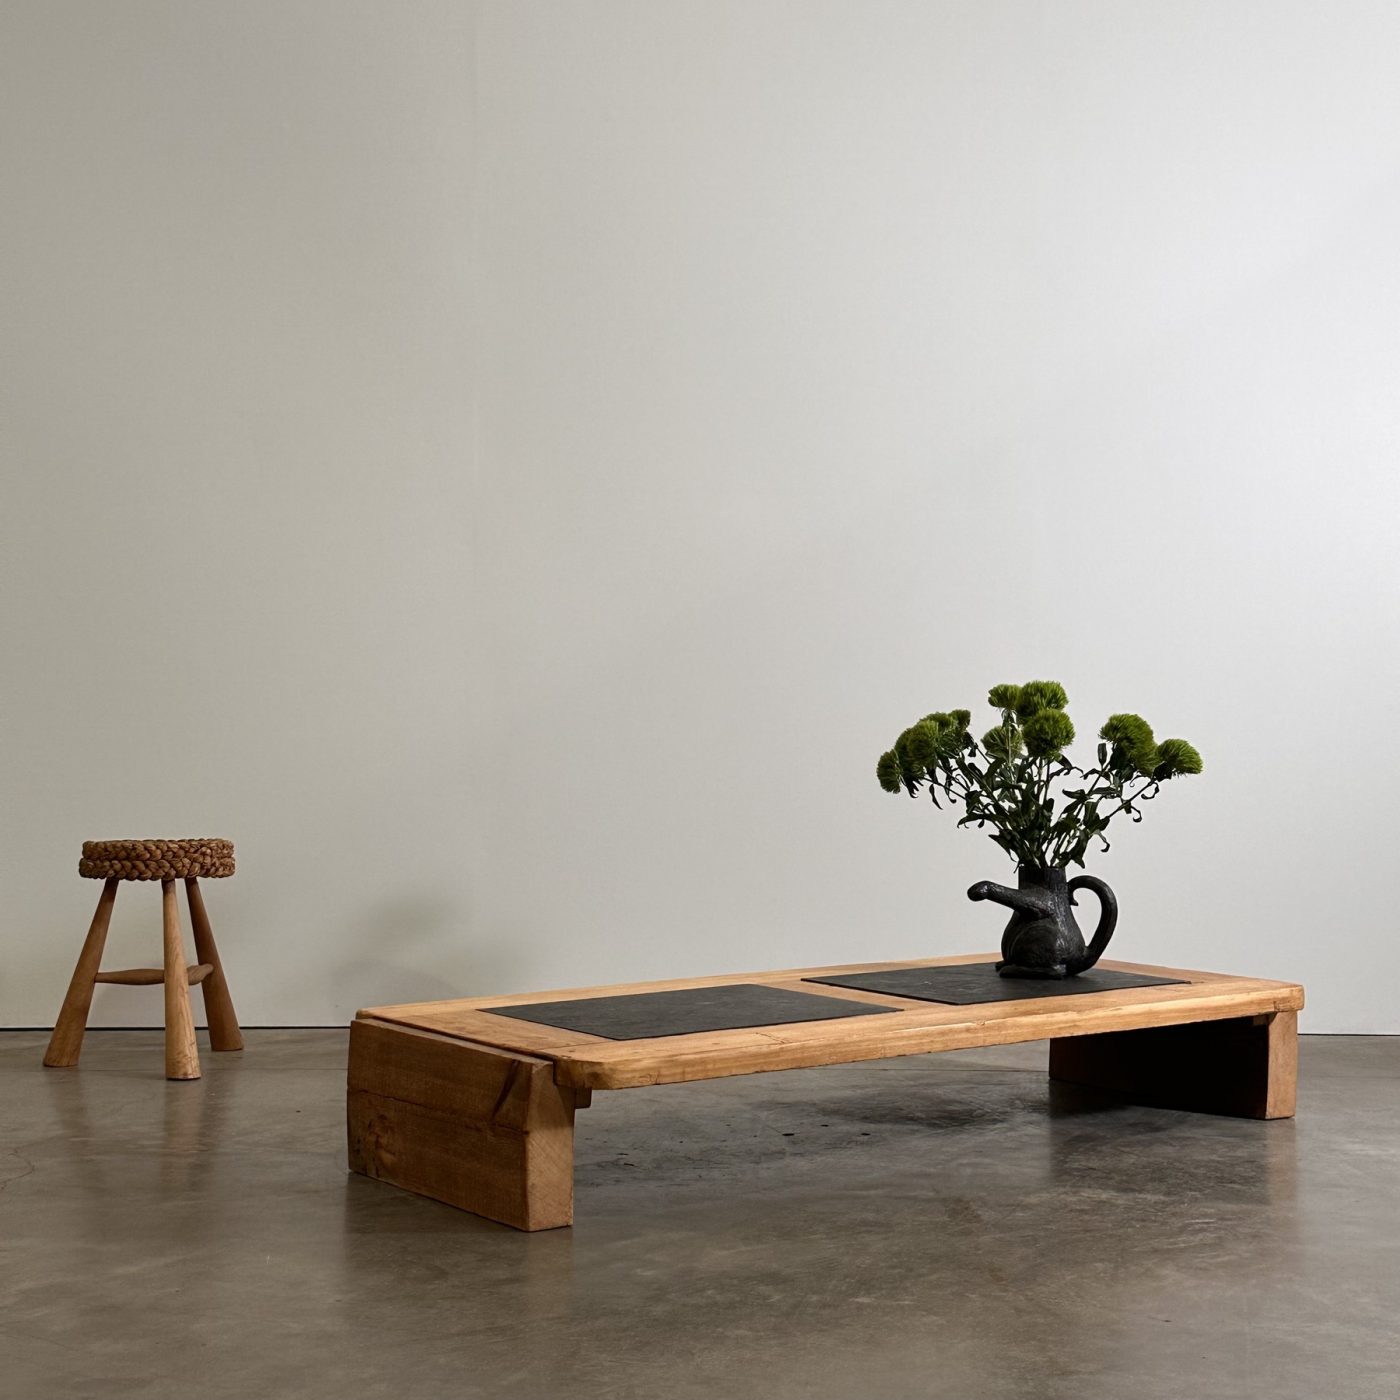 objet-vagabond-primitive-stone-table0009